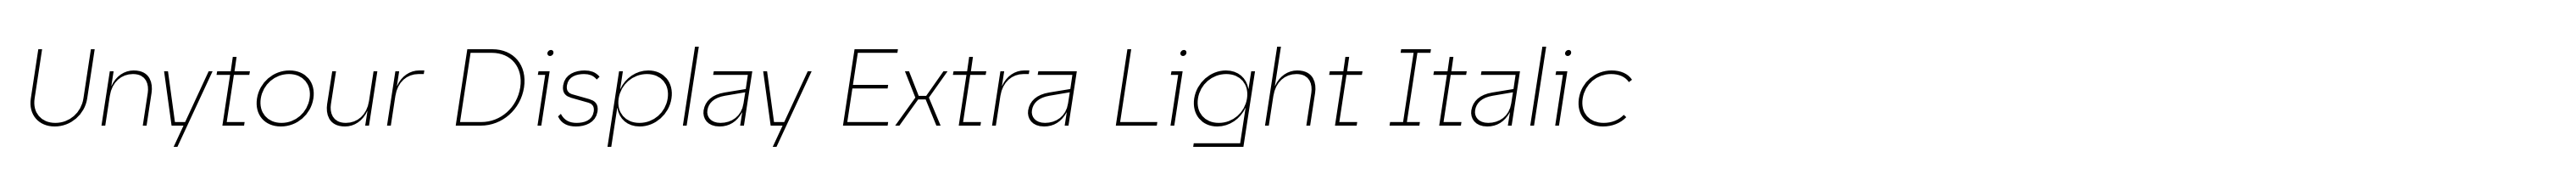 Unytour Display Extra Light Italic